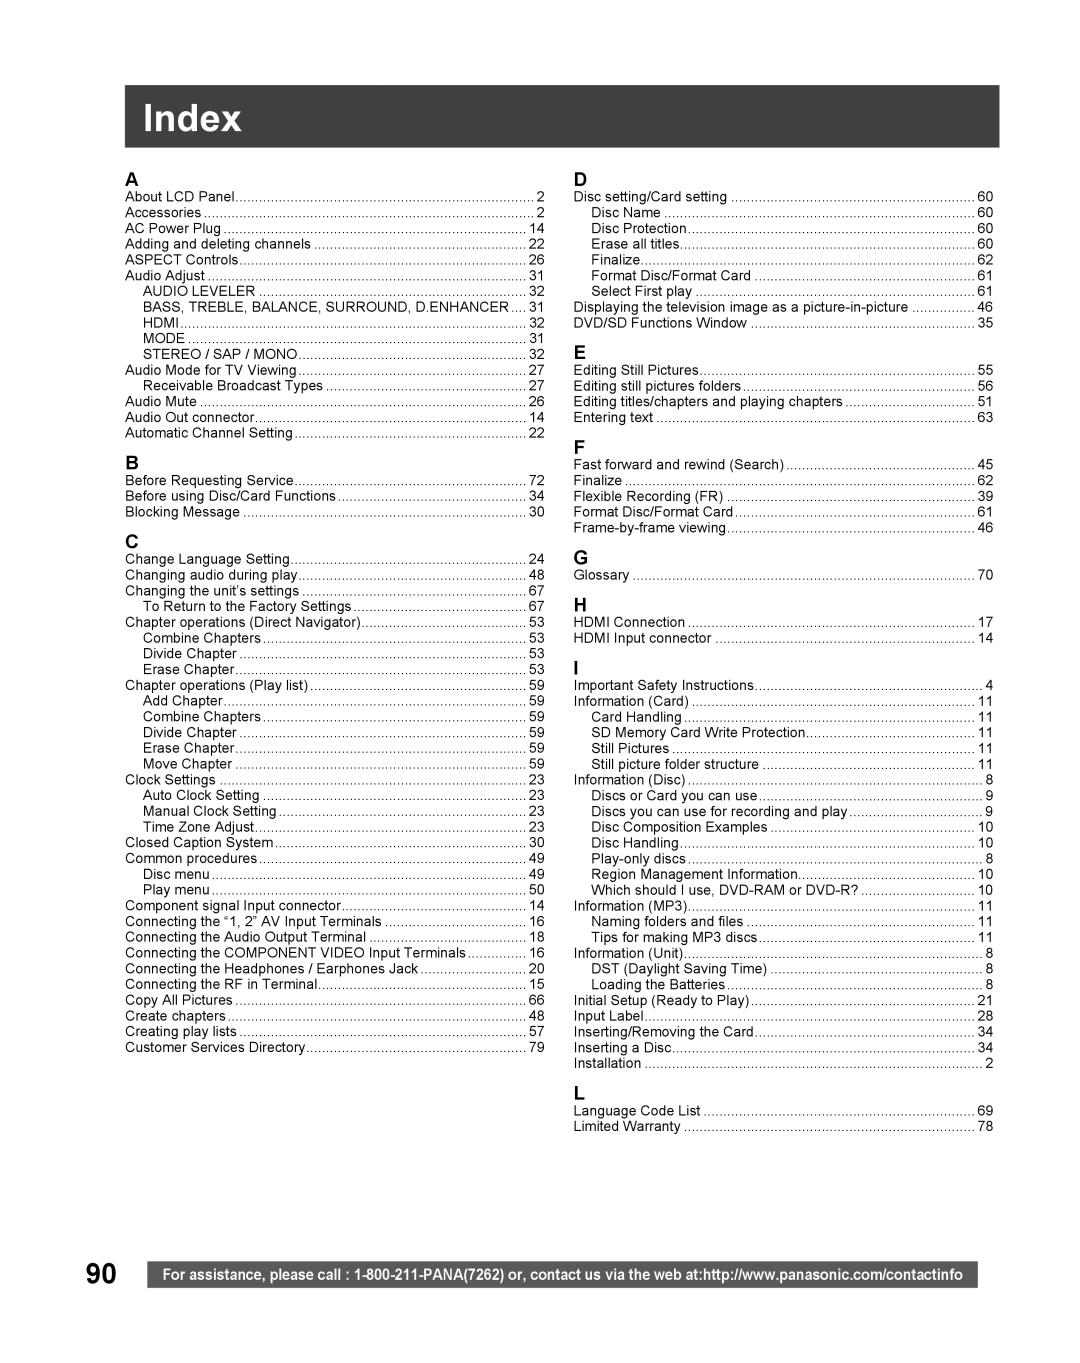 Panasonic TC 22LR30 manual Index 